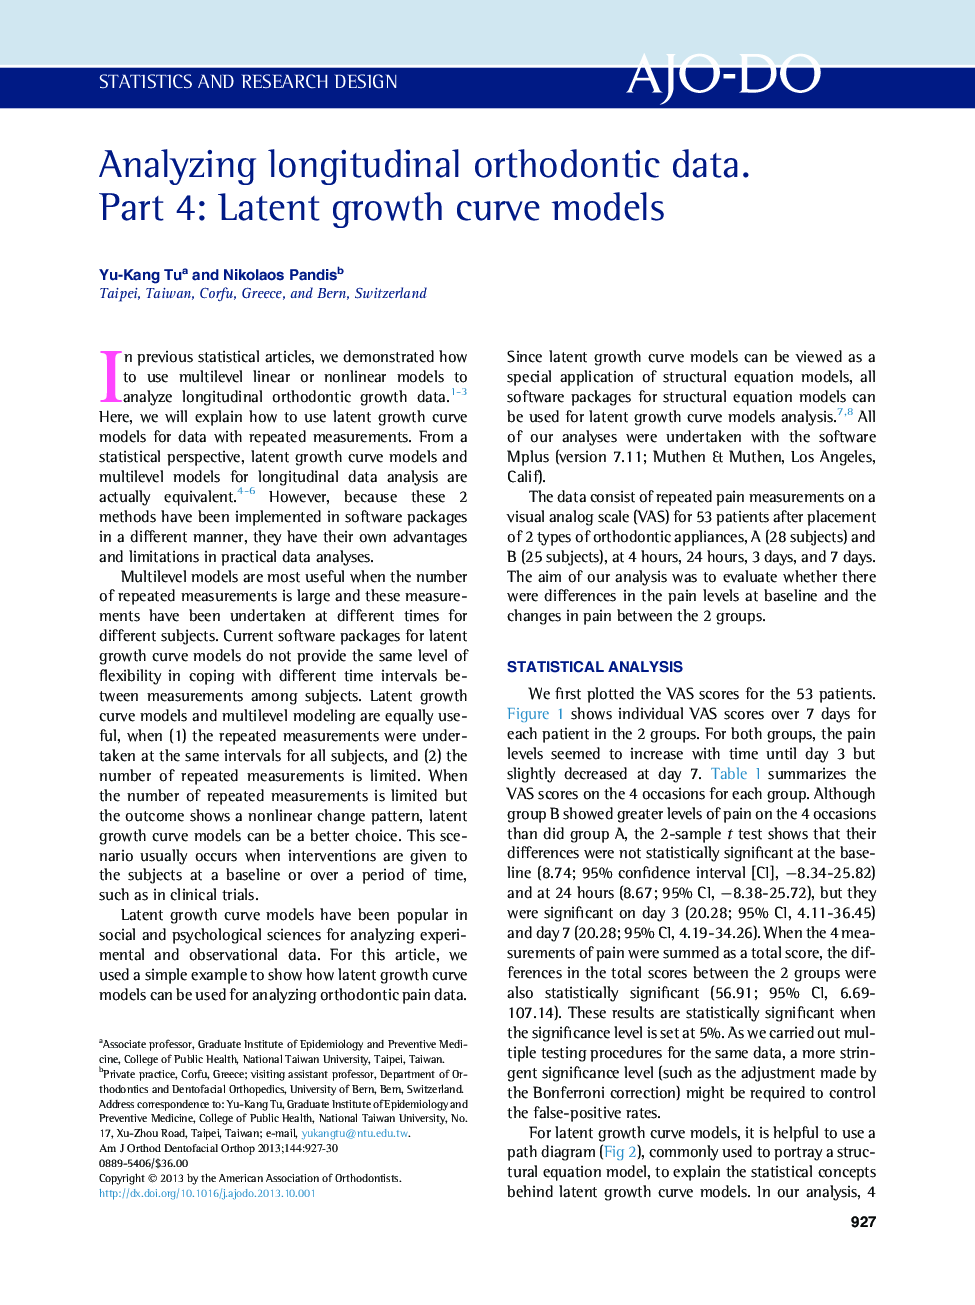 Analyzing longitudinal orthodontic data. Part 4: Latent growth curve models